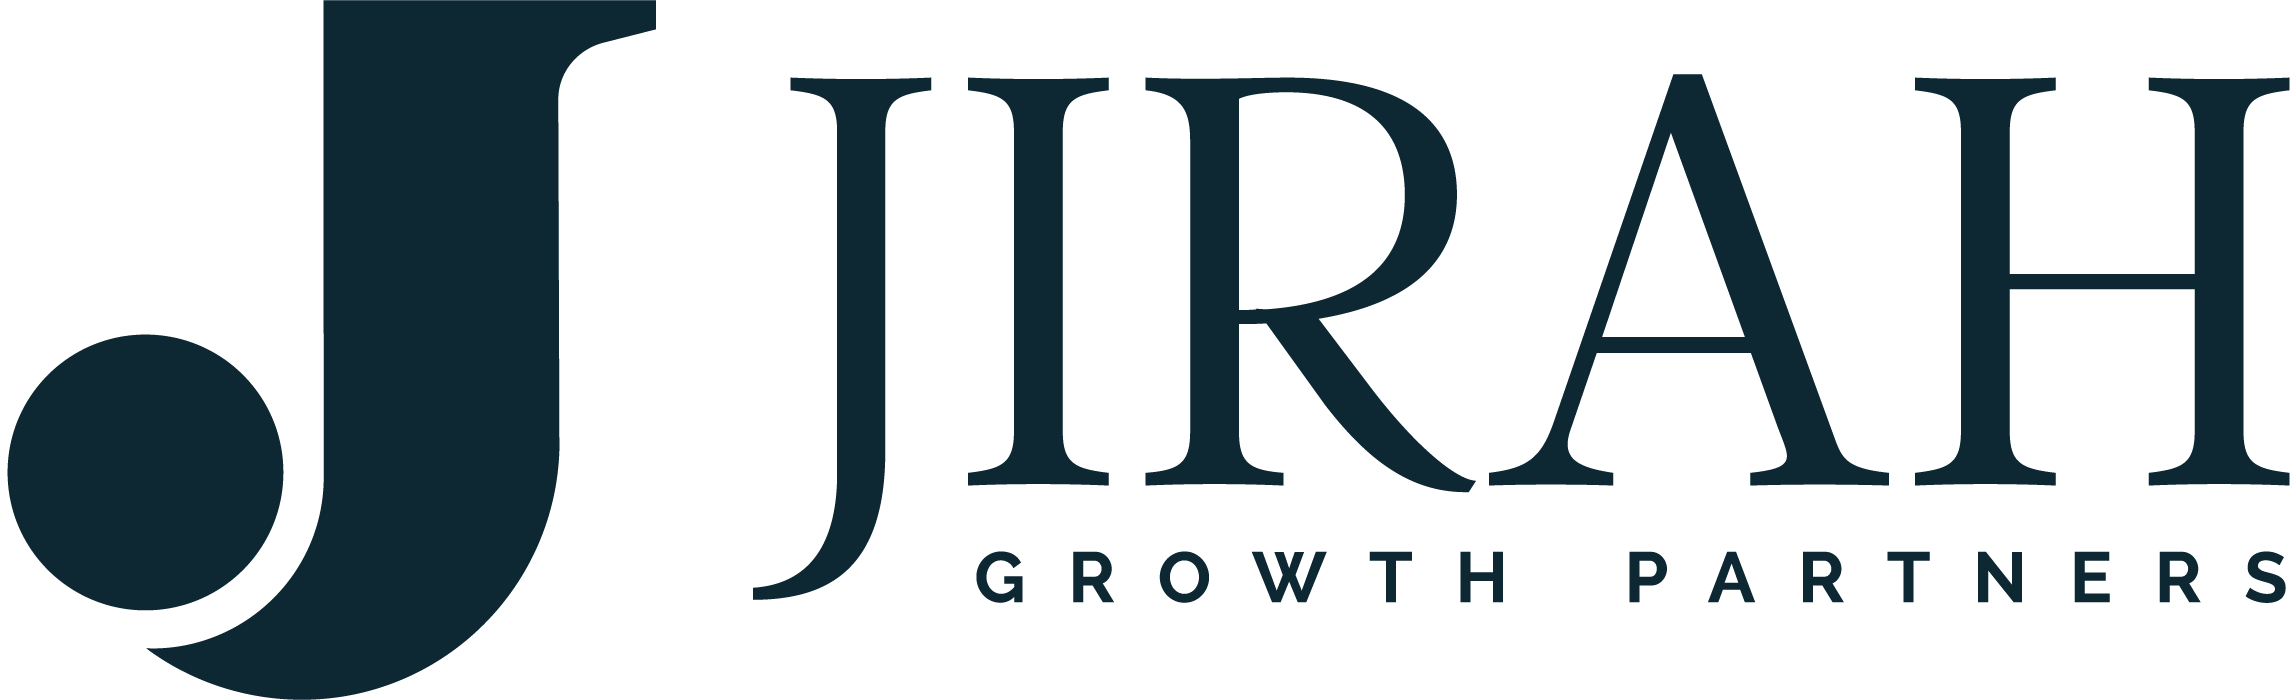 JIRAH Growth Partners